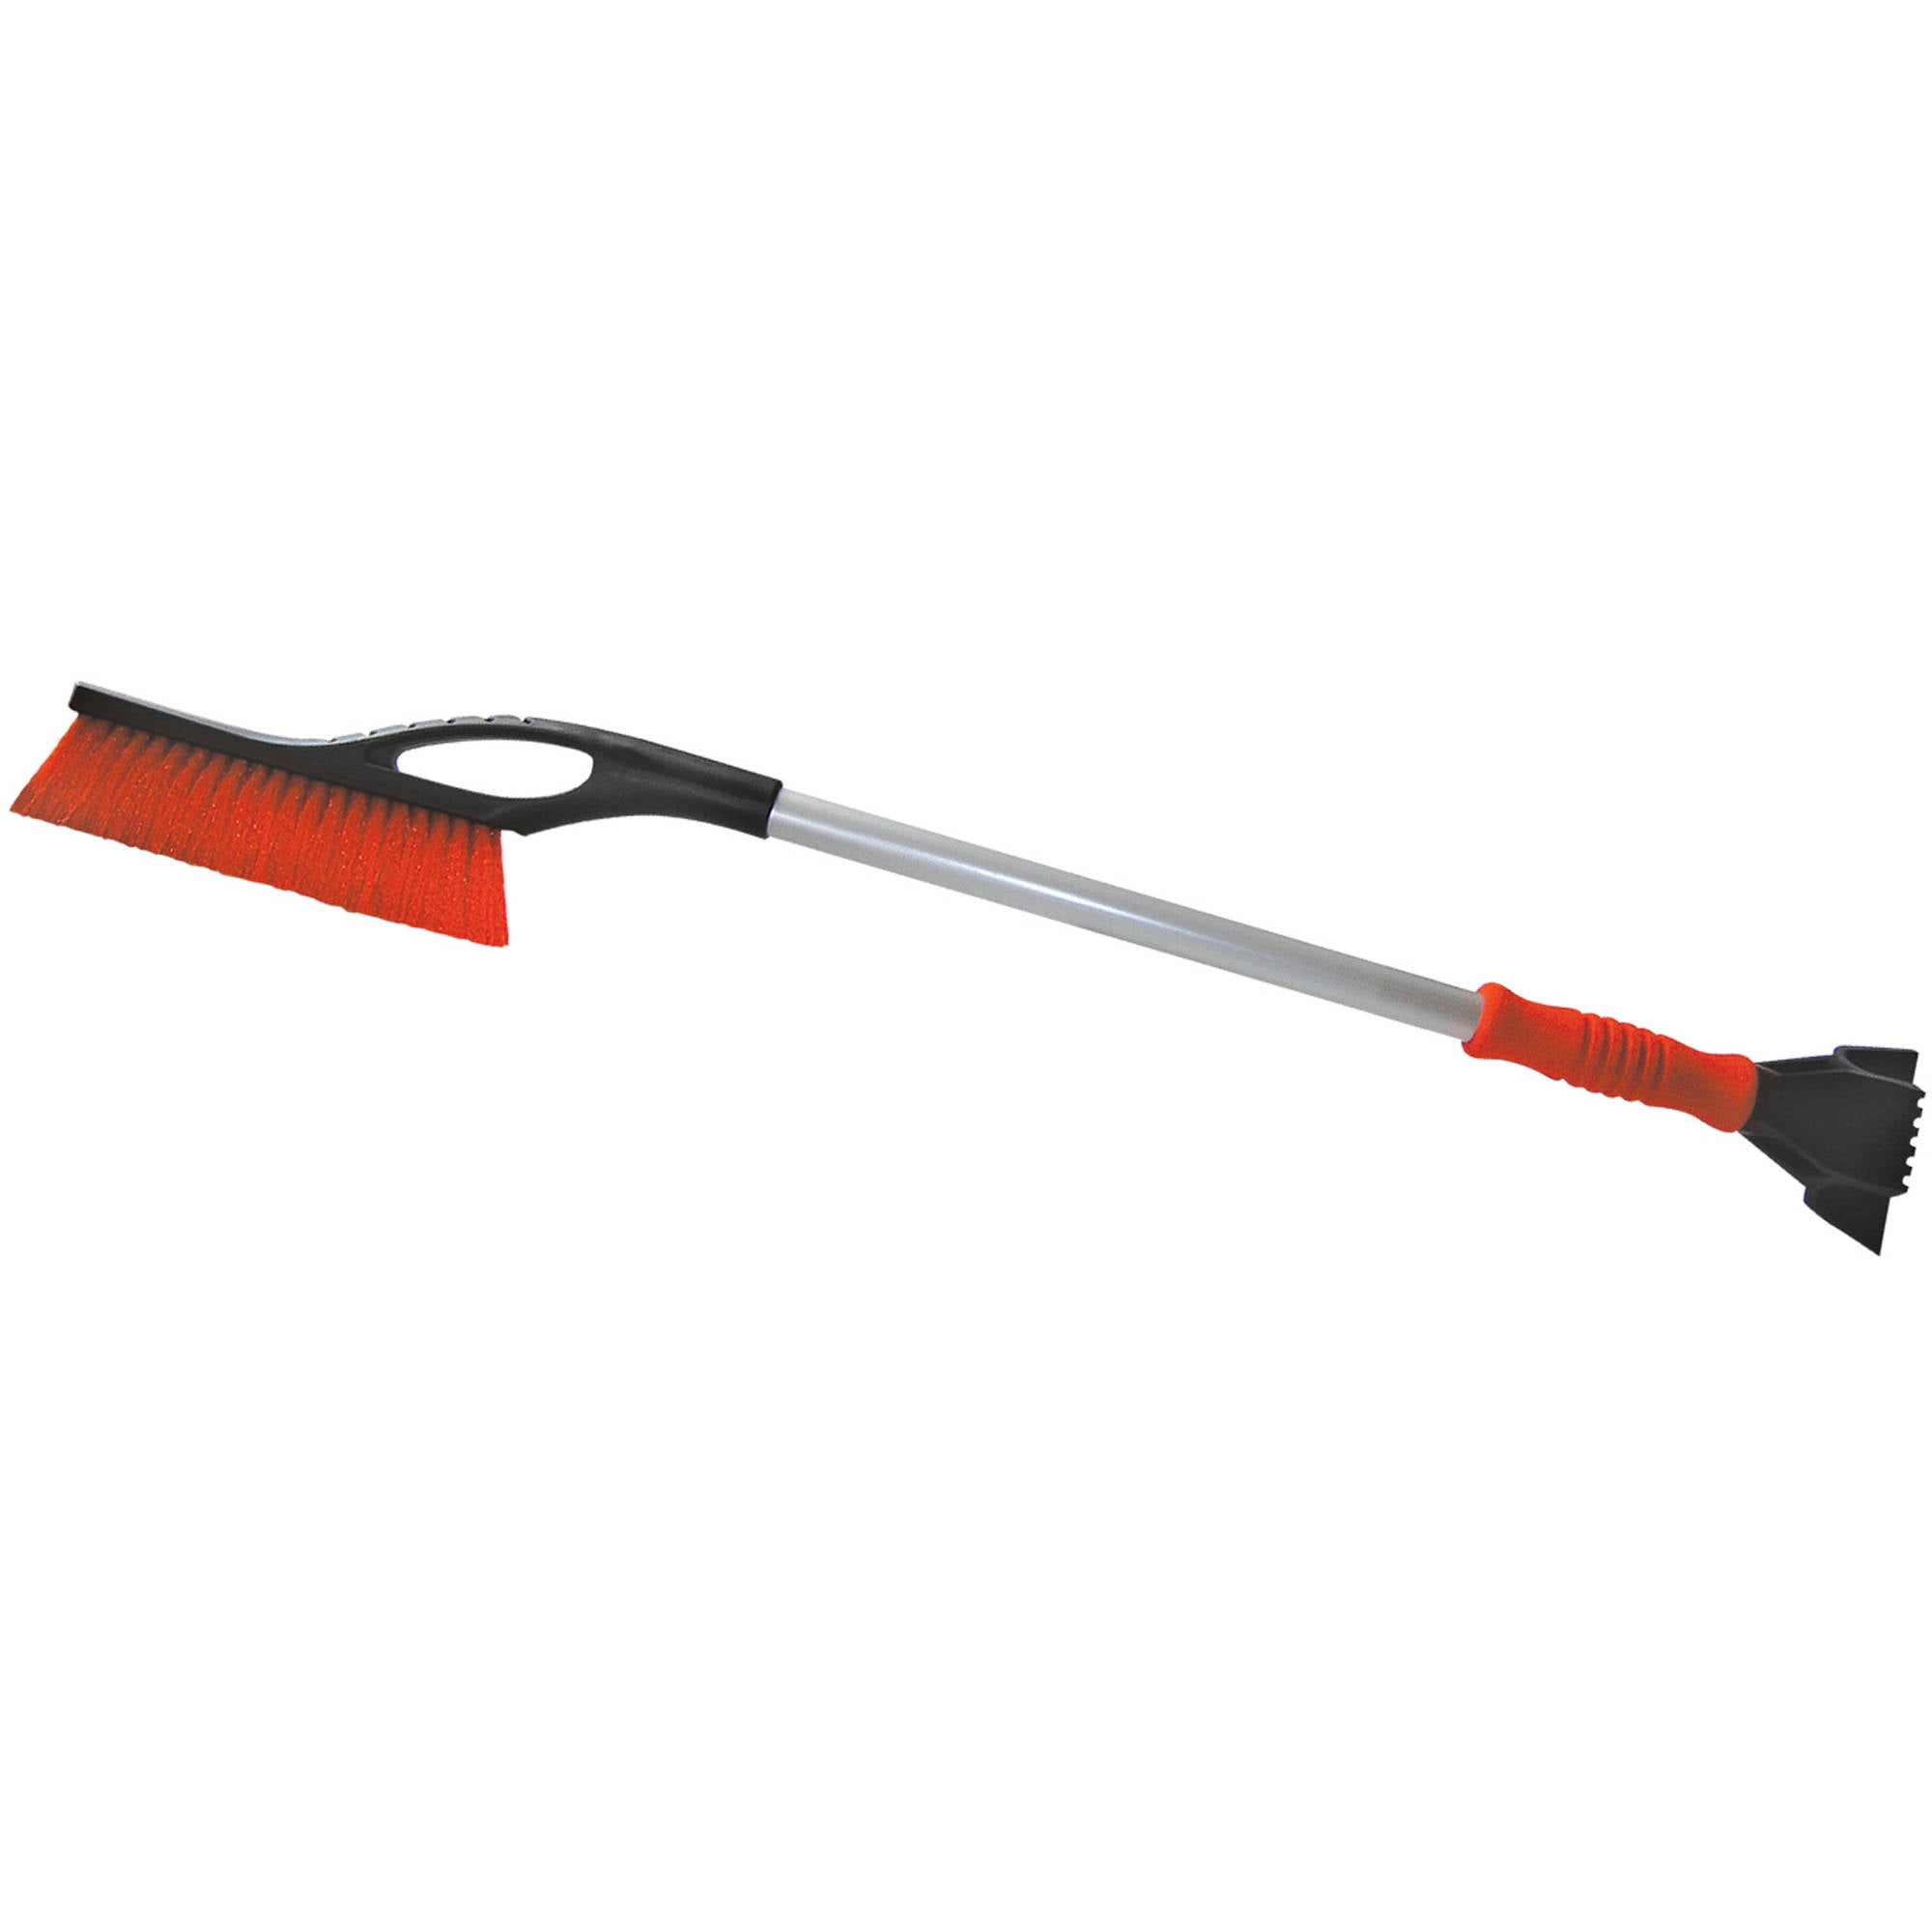 Black Talon Tools Expandable 5 in 1 Snow Removal Tool Kit Shovel Scraper Squeegee Brush Heavy Duty Aluminum